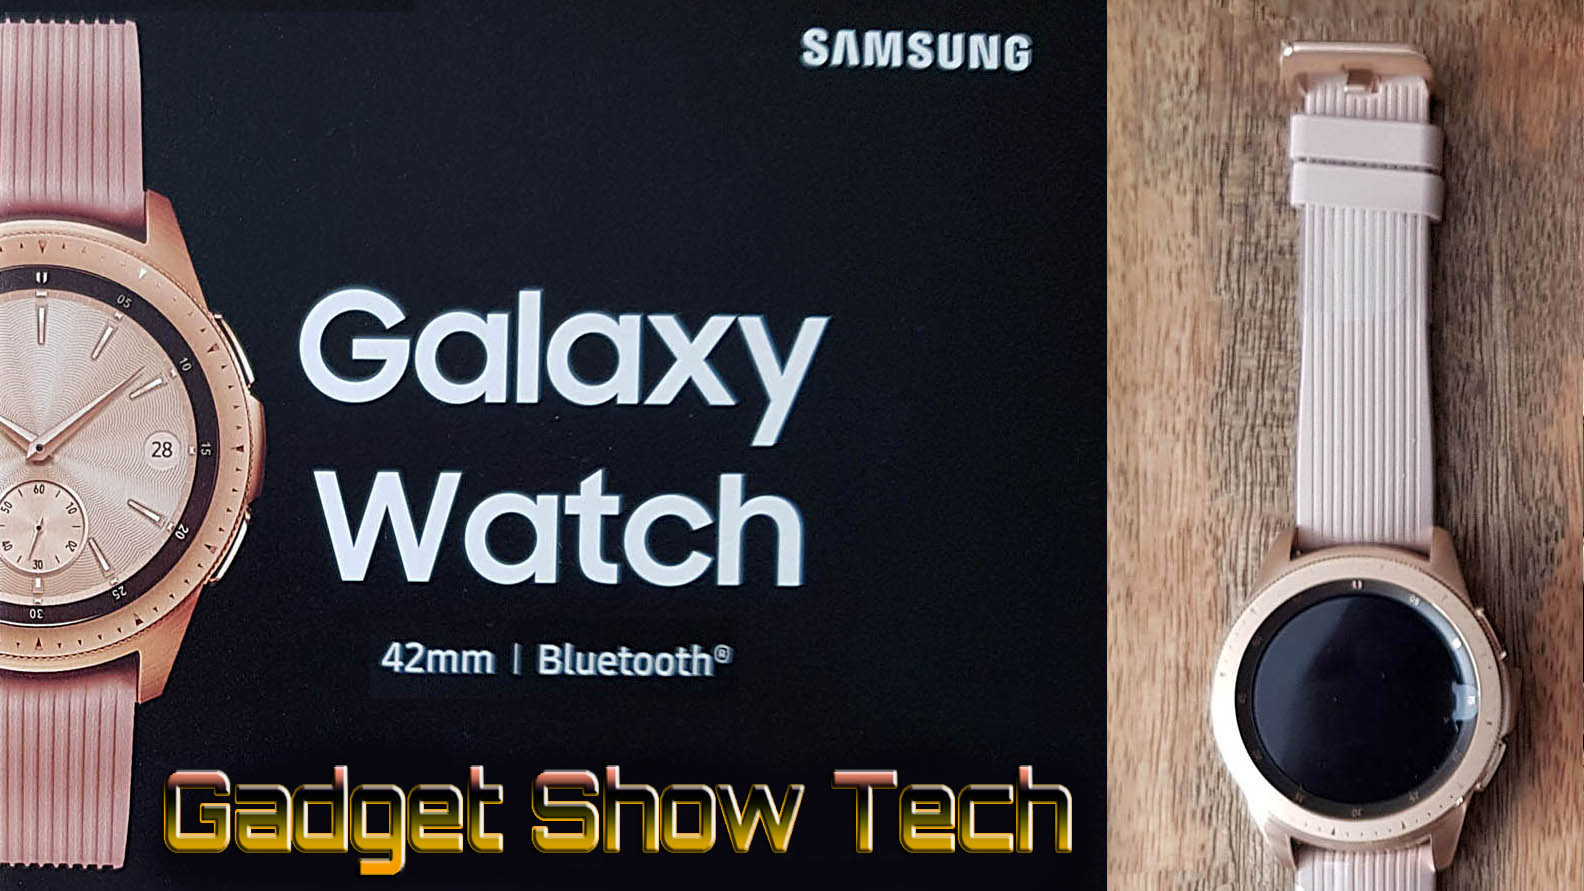 Samsung Galaxy Watch - Ultimate Smartwatch Comparison 2018